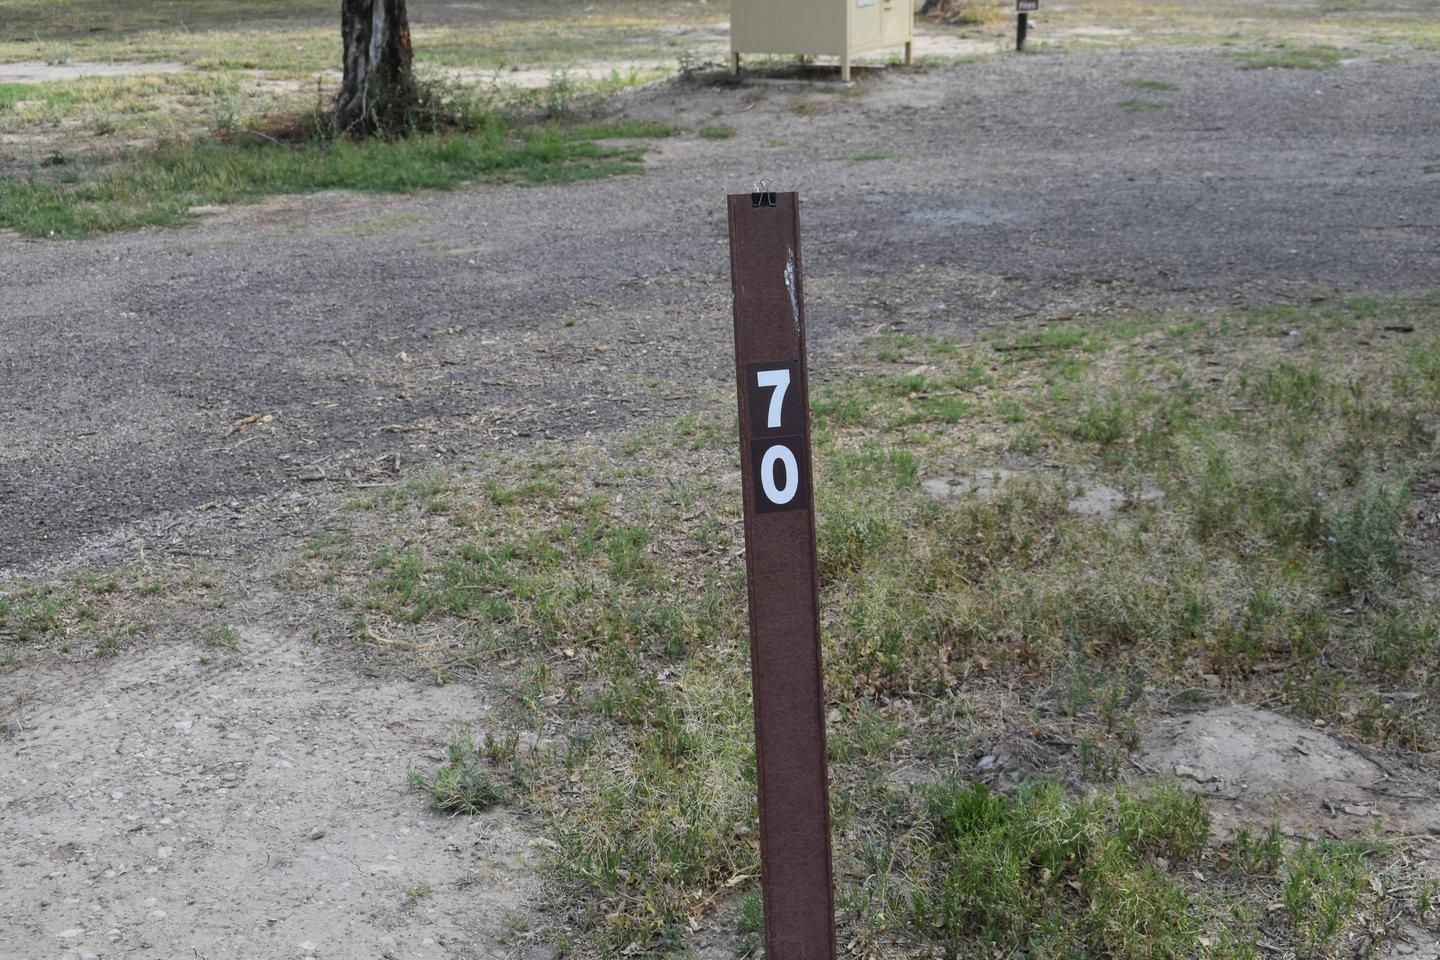 Brown site markerSite marker Site 70